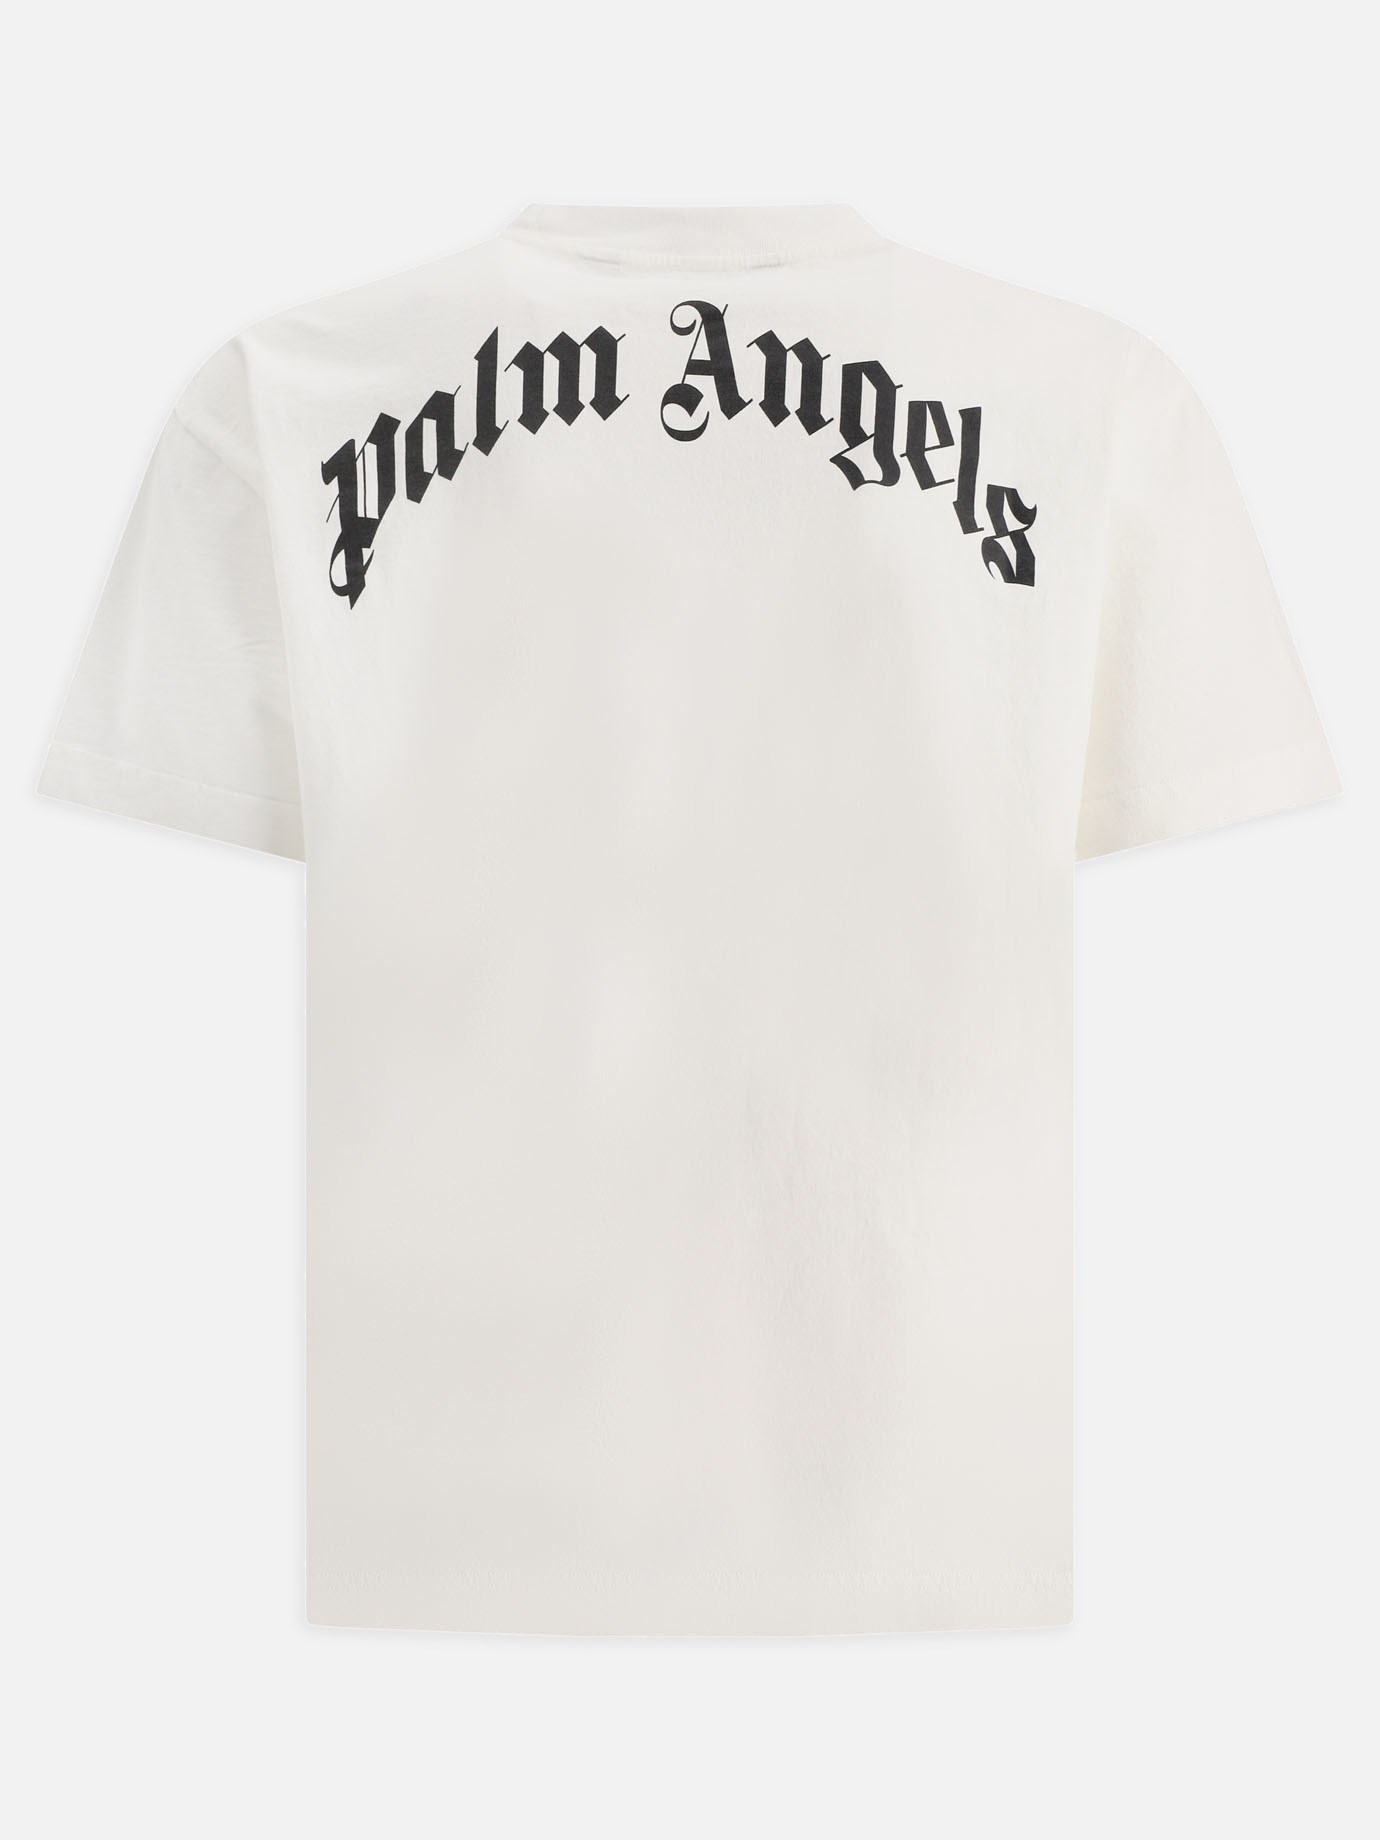 T-shirt  Broken Palm  by Palm Angels